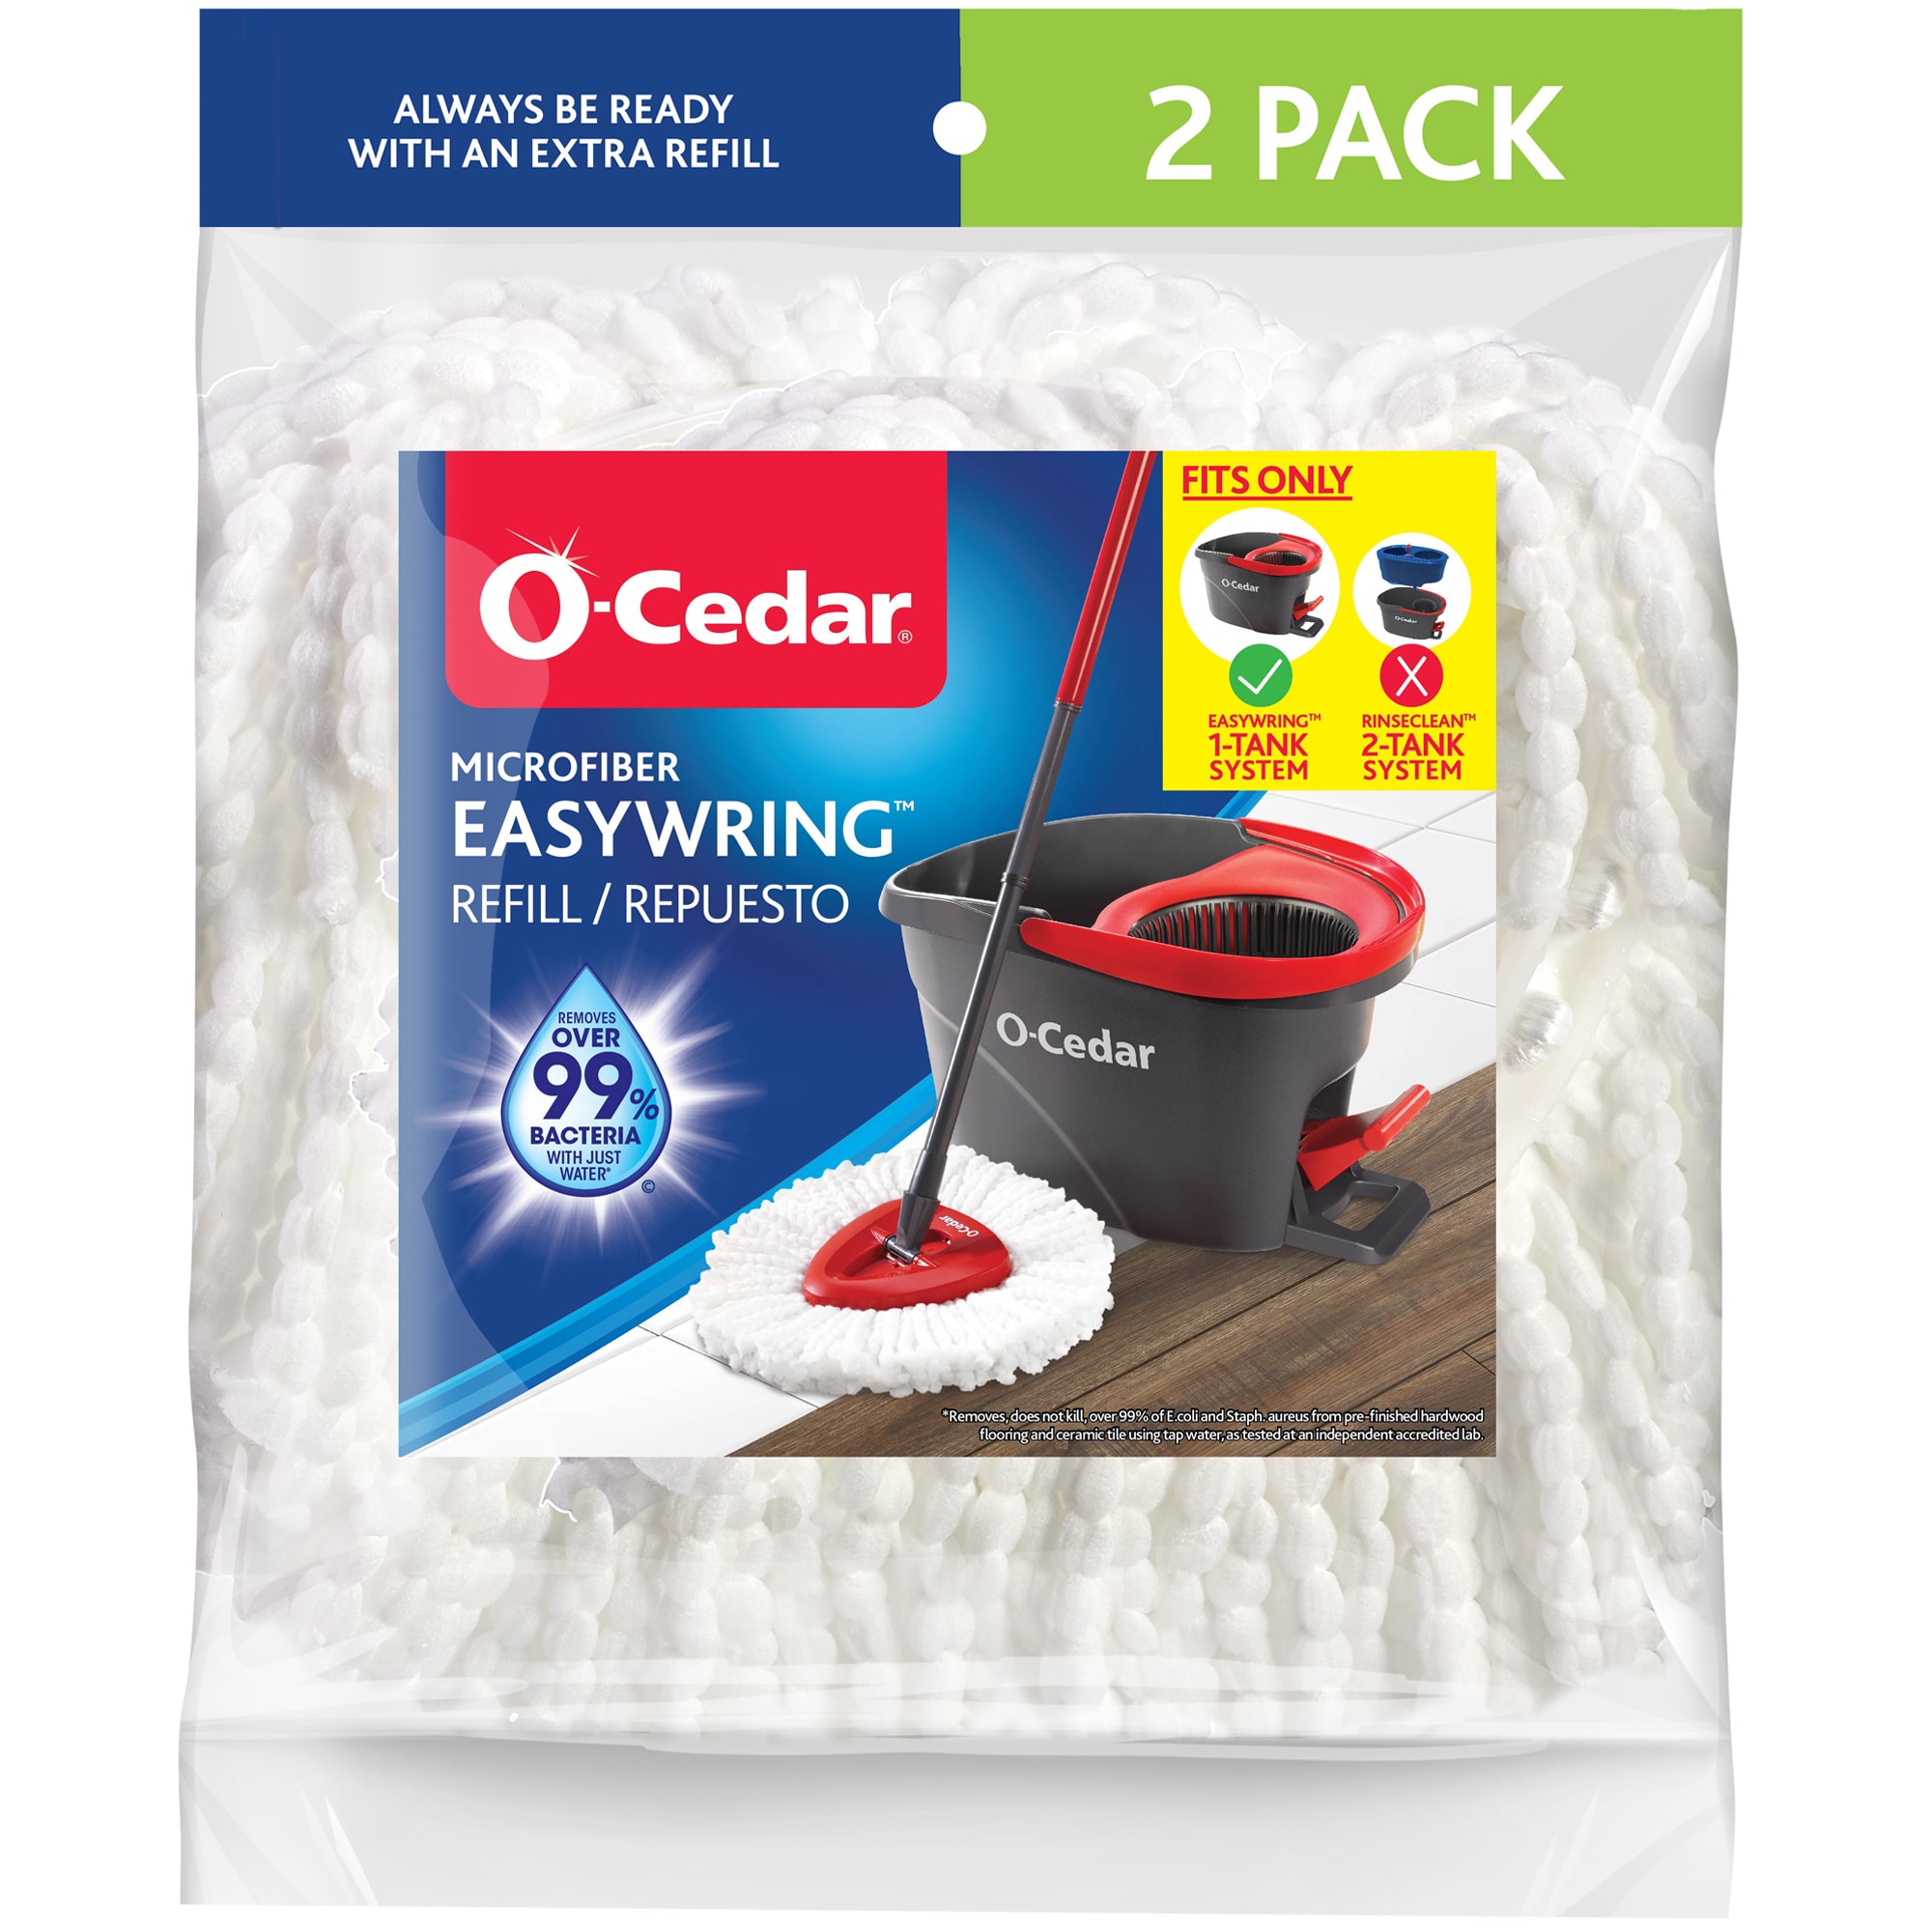 O-Cedar Microfiber Cloth Mop Refill, Machine Washable and Reusable